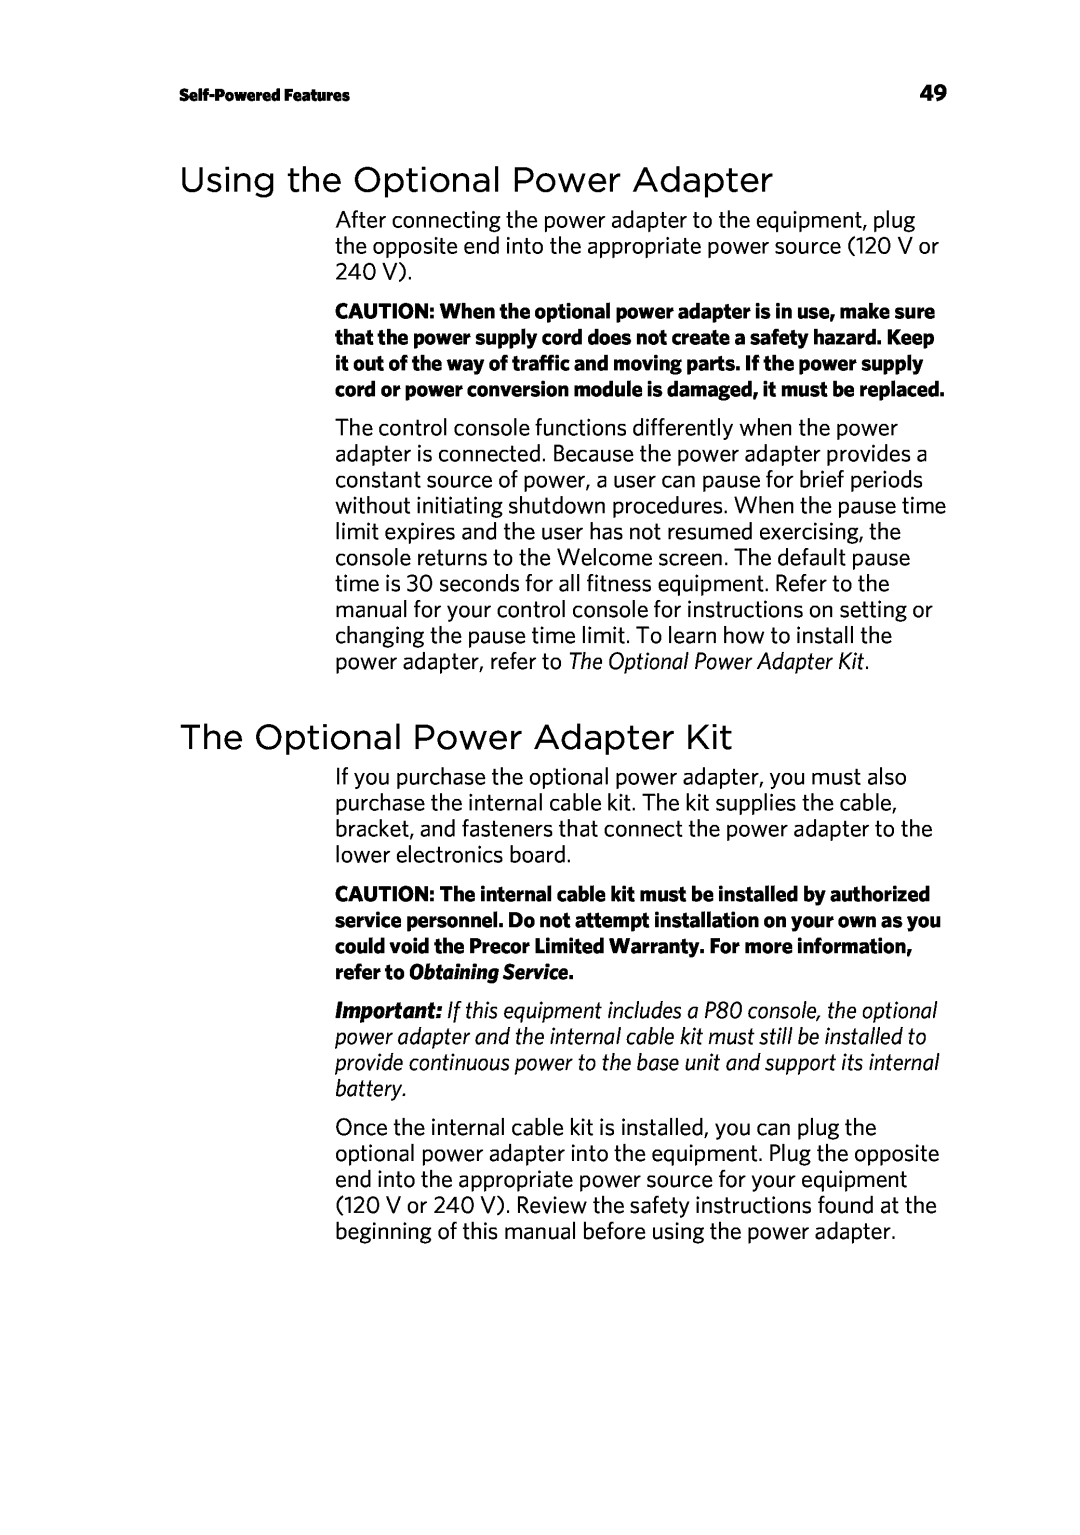 Precor P30 manual Using the Optional Power Adapter, The Optional Power Adapter Kit, Self-Powered Features 